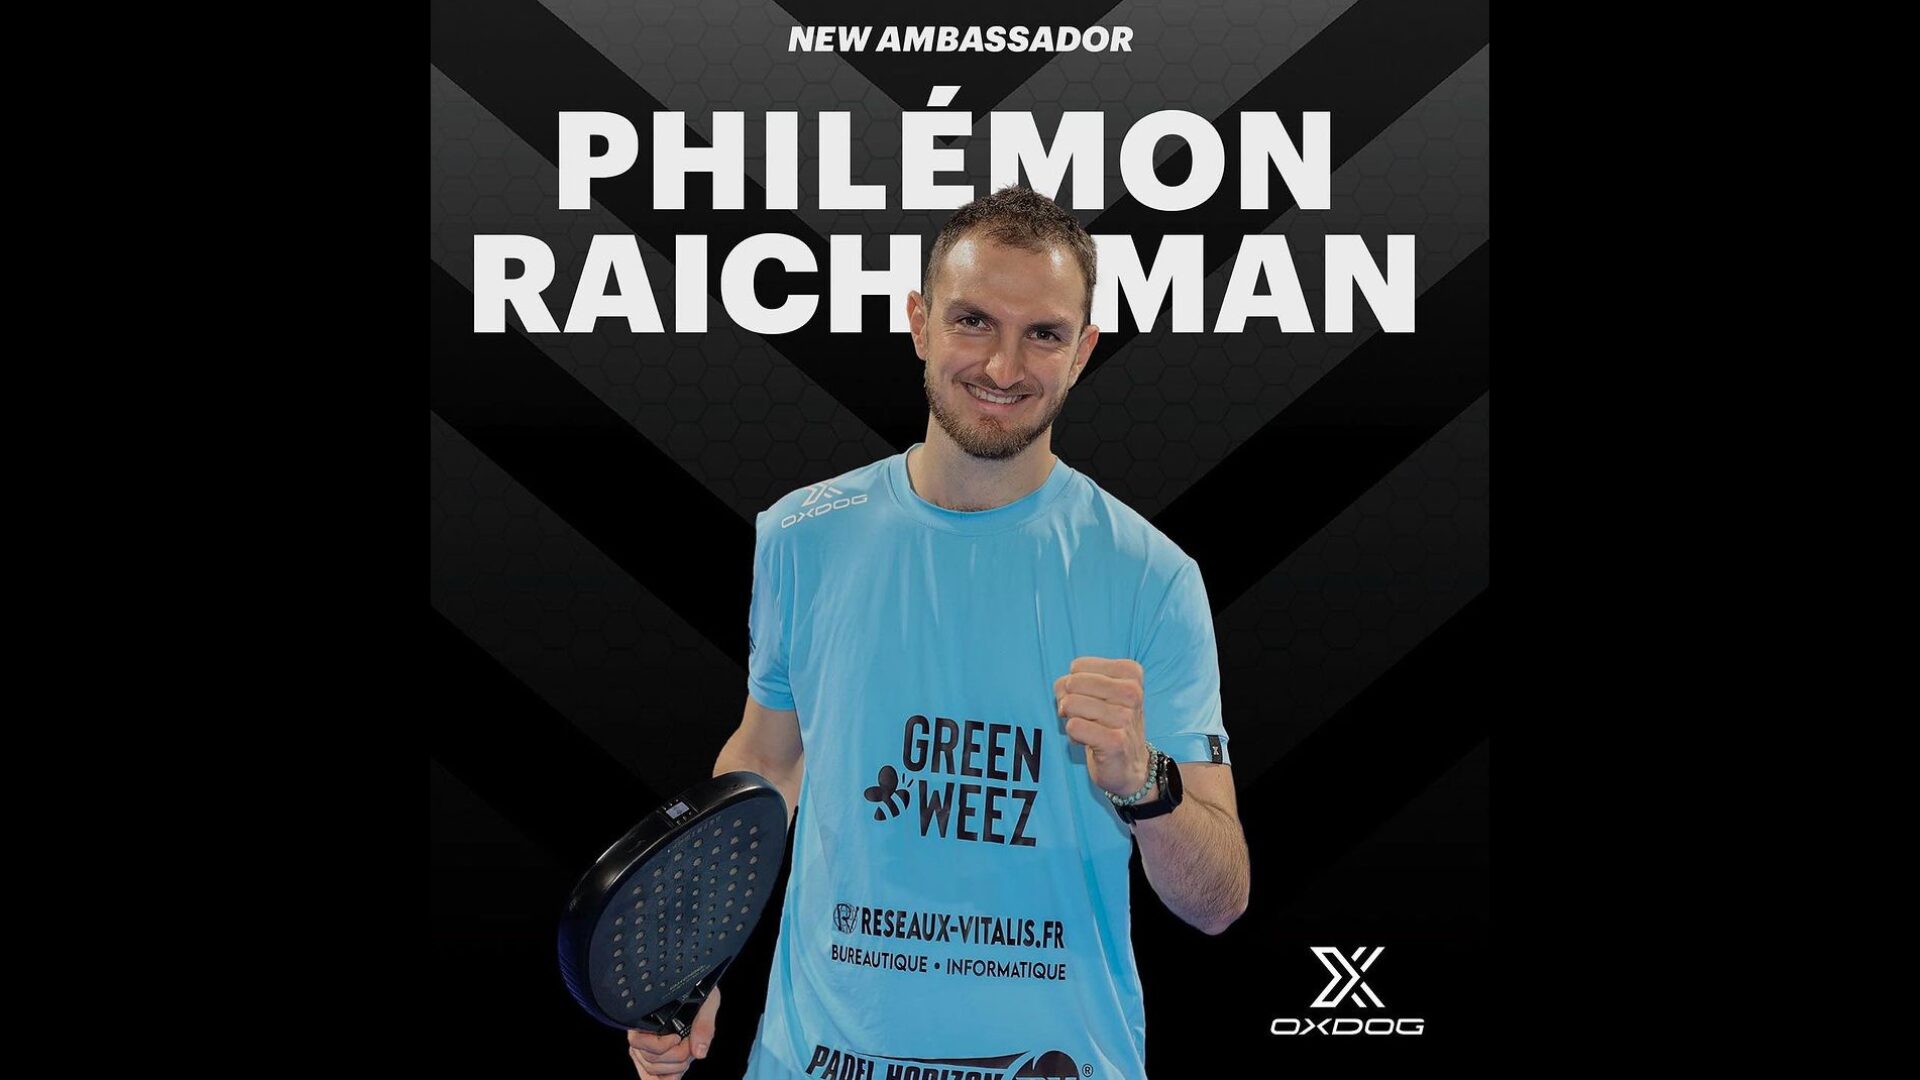 Philémon Raichman se junta à equipe Oxdog